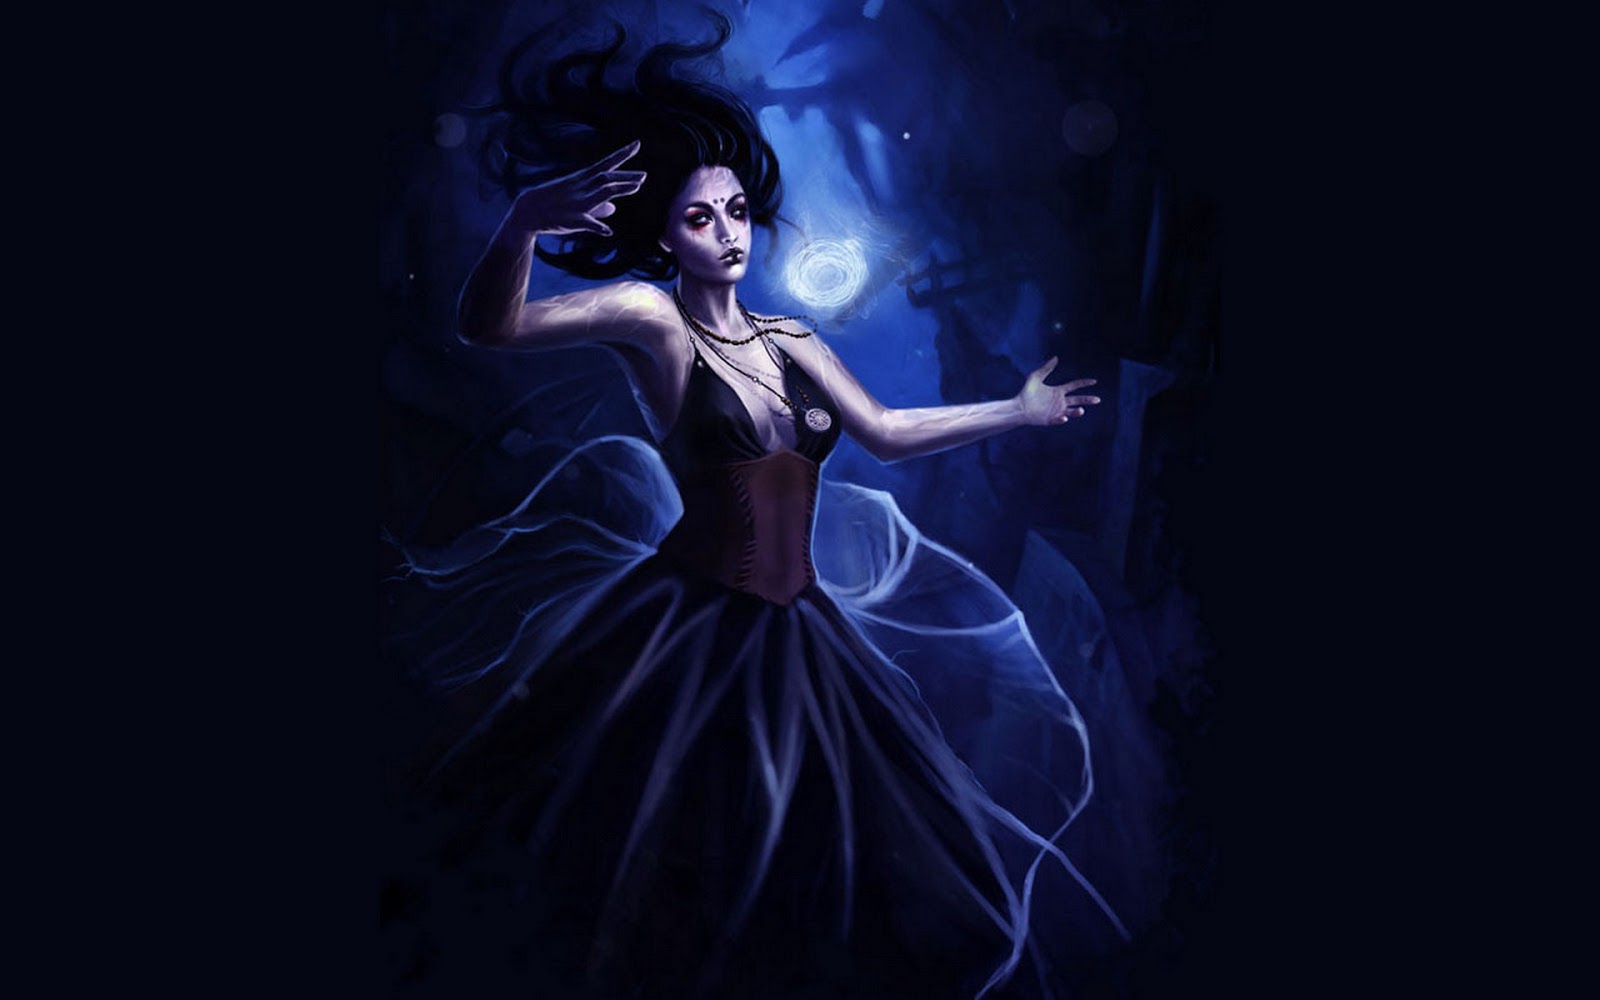 Vampire Fantasy Women Wallpaper Pictures